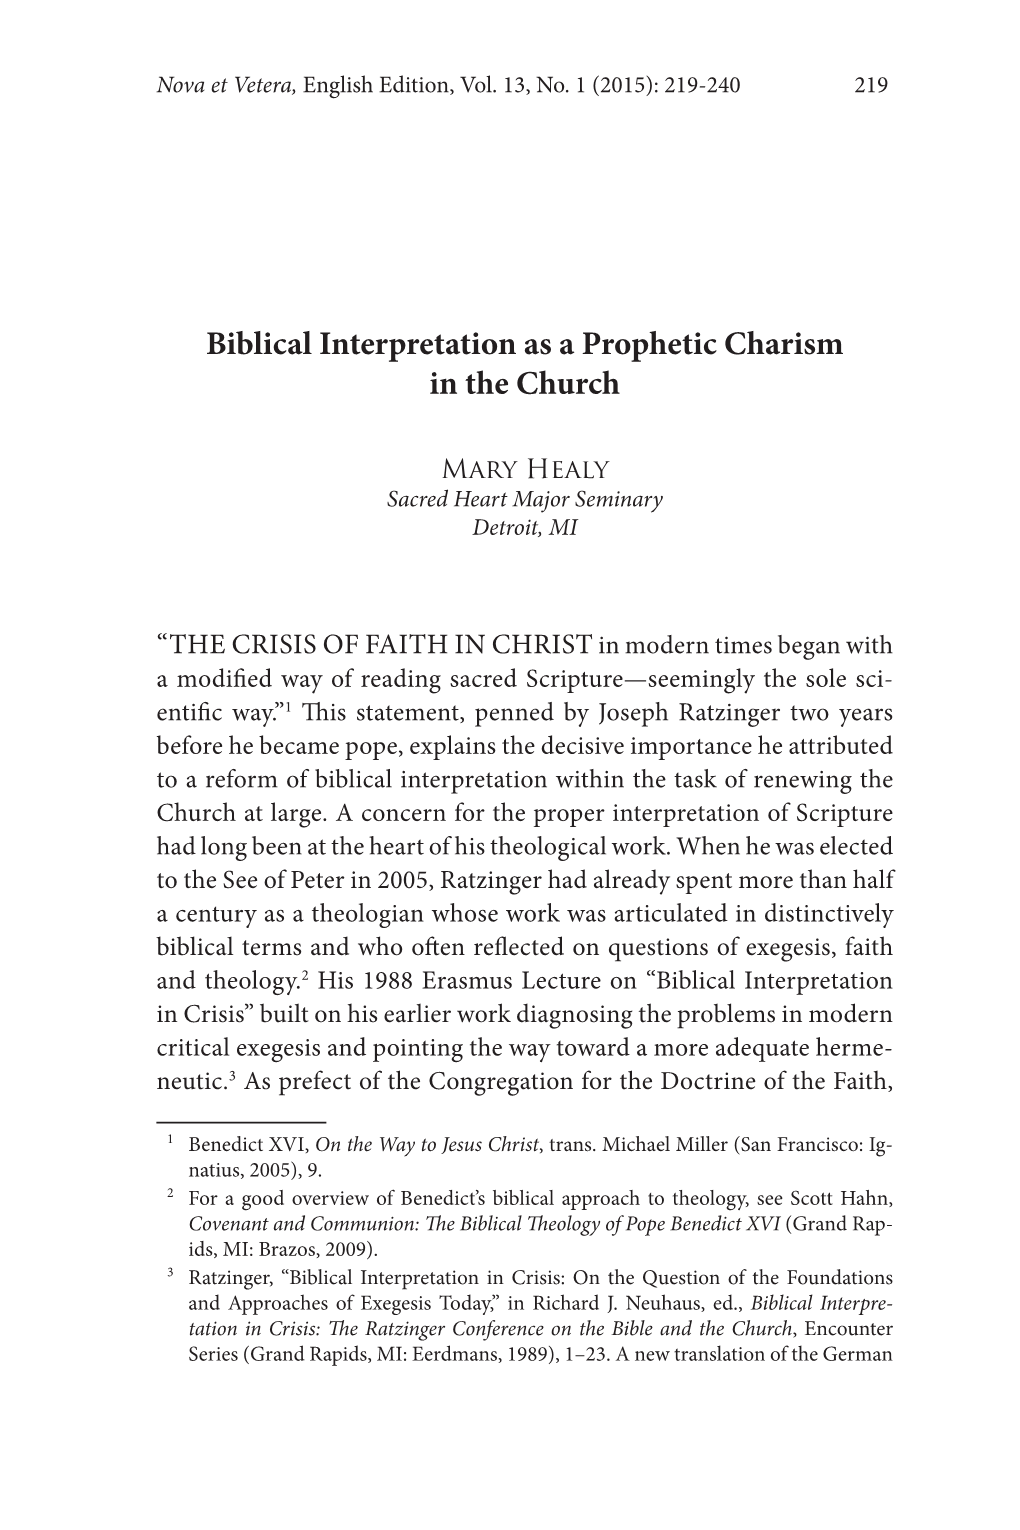 Biblical Interpretation As a Prophetic Charism in the Church